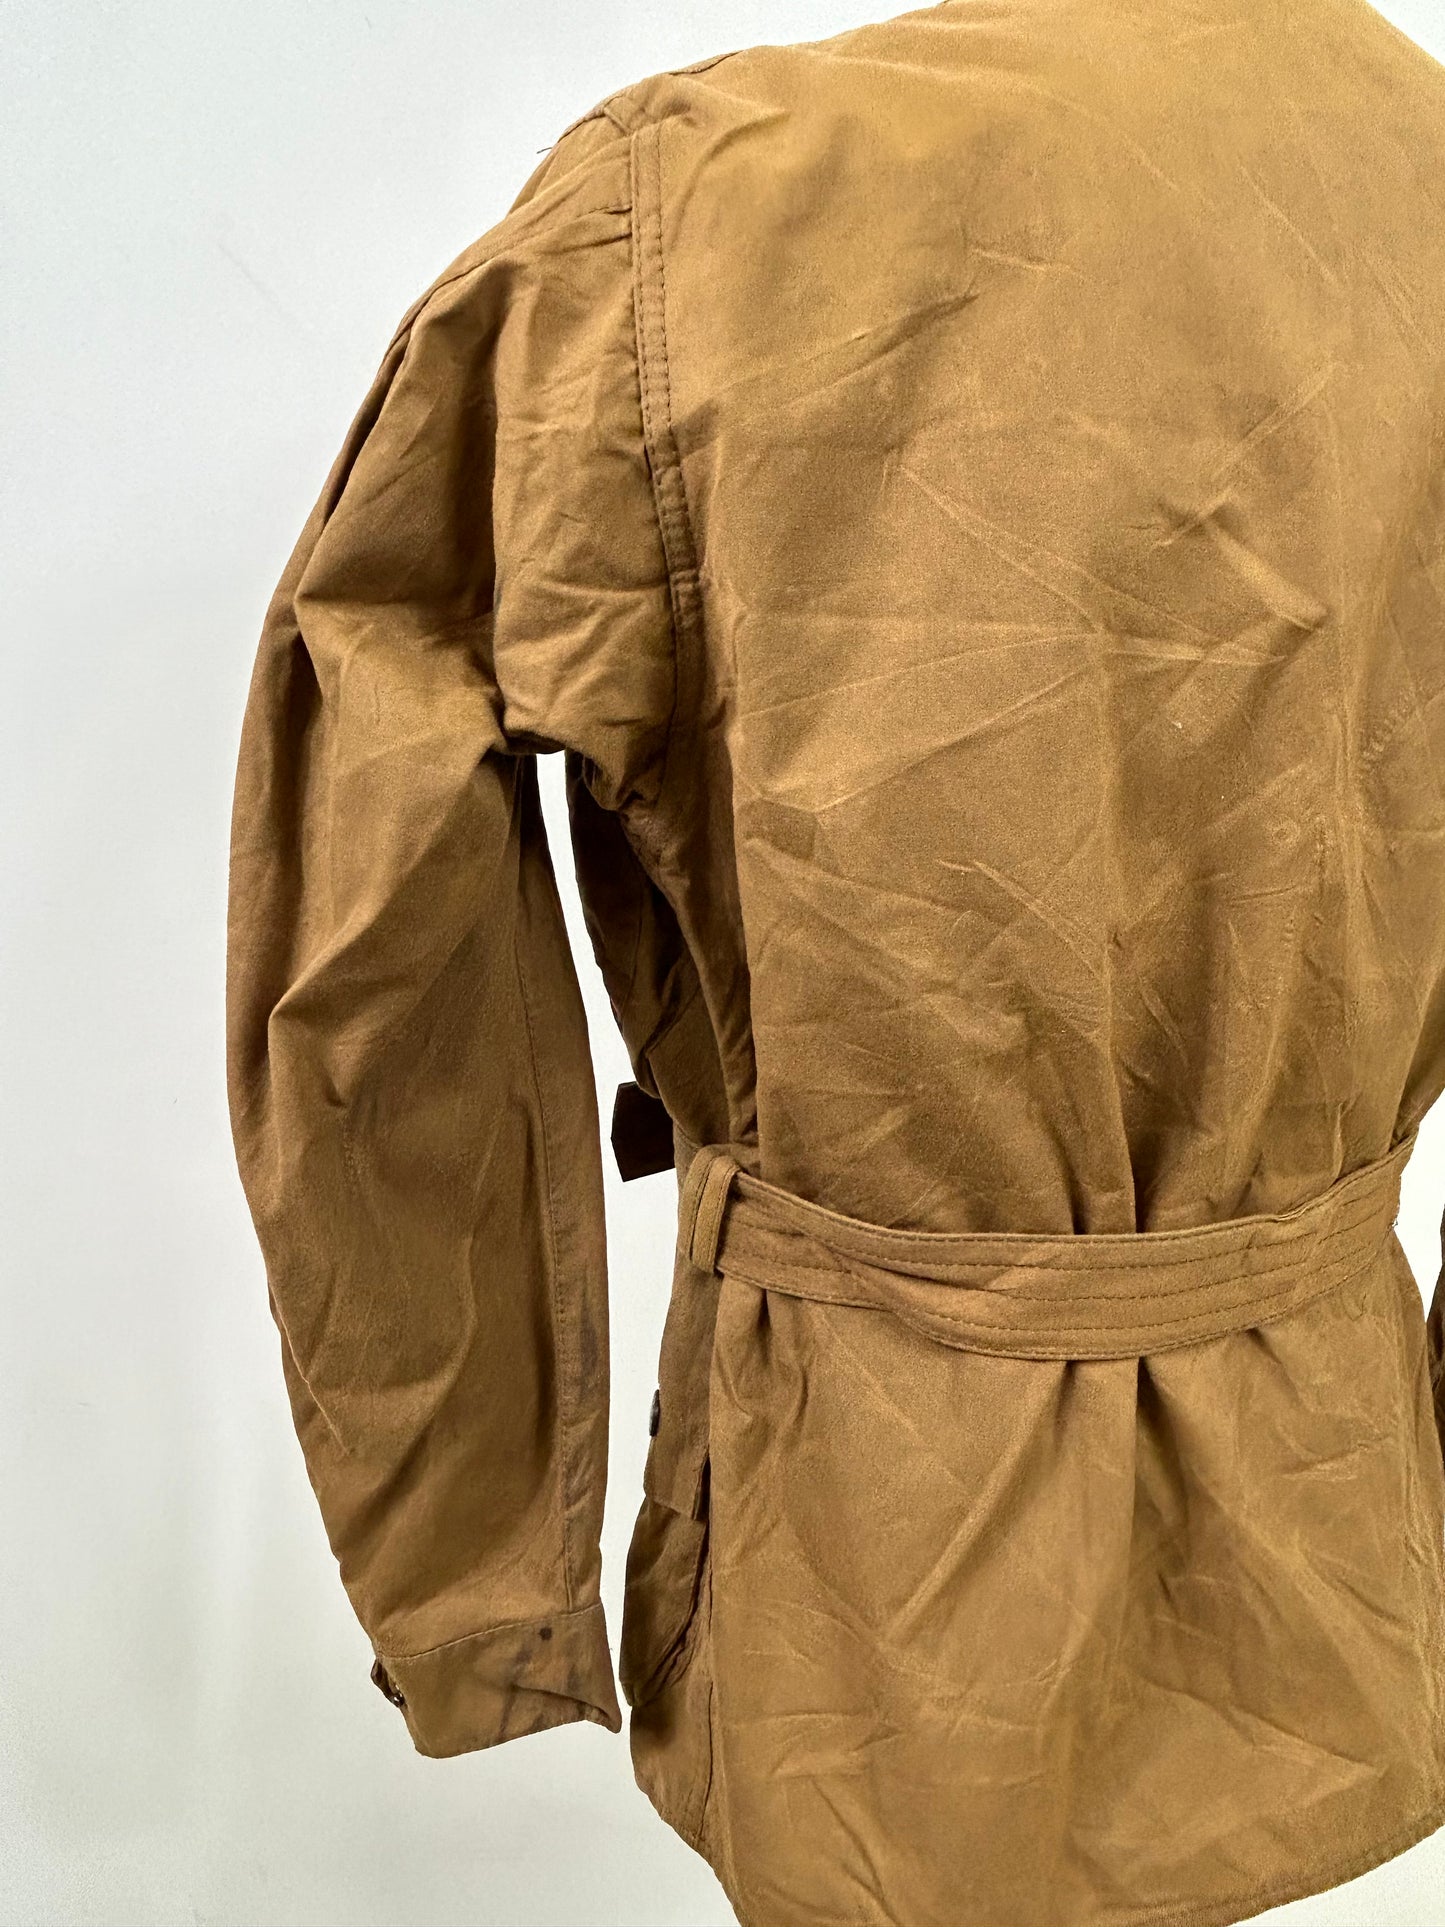 GIacca Barbour International da uomo marrone chiaro c38/97cm-Man Motorcycle brown jacket size S/Ml